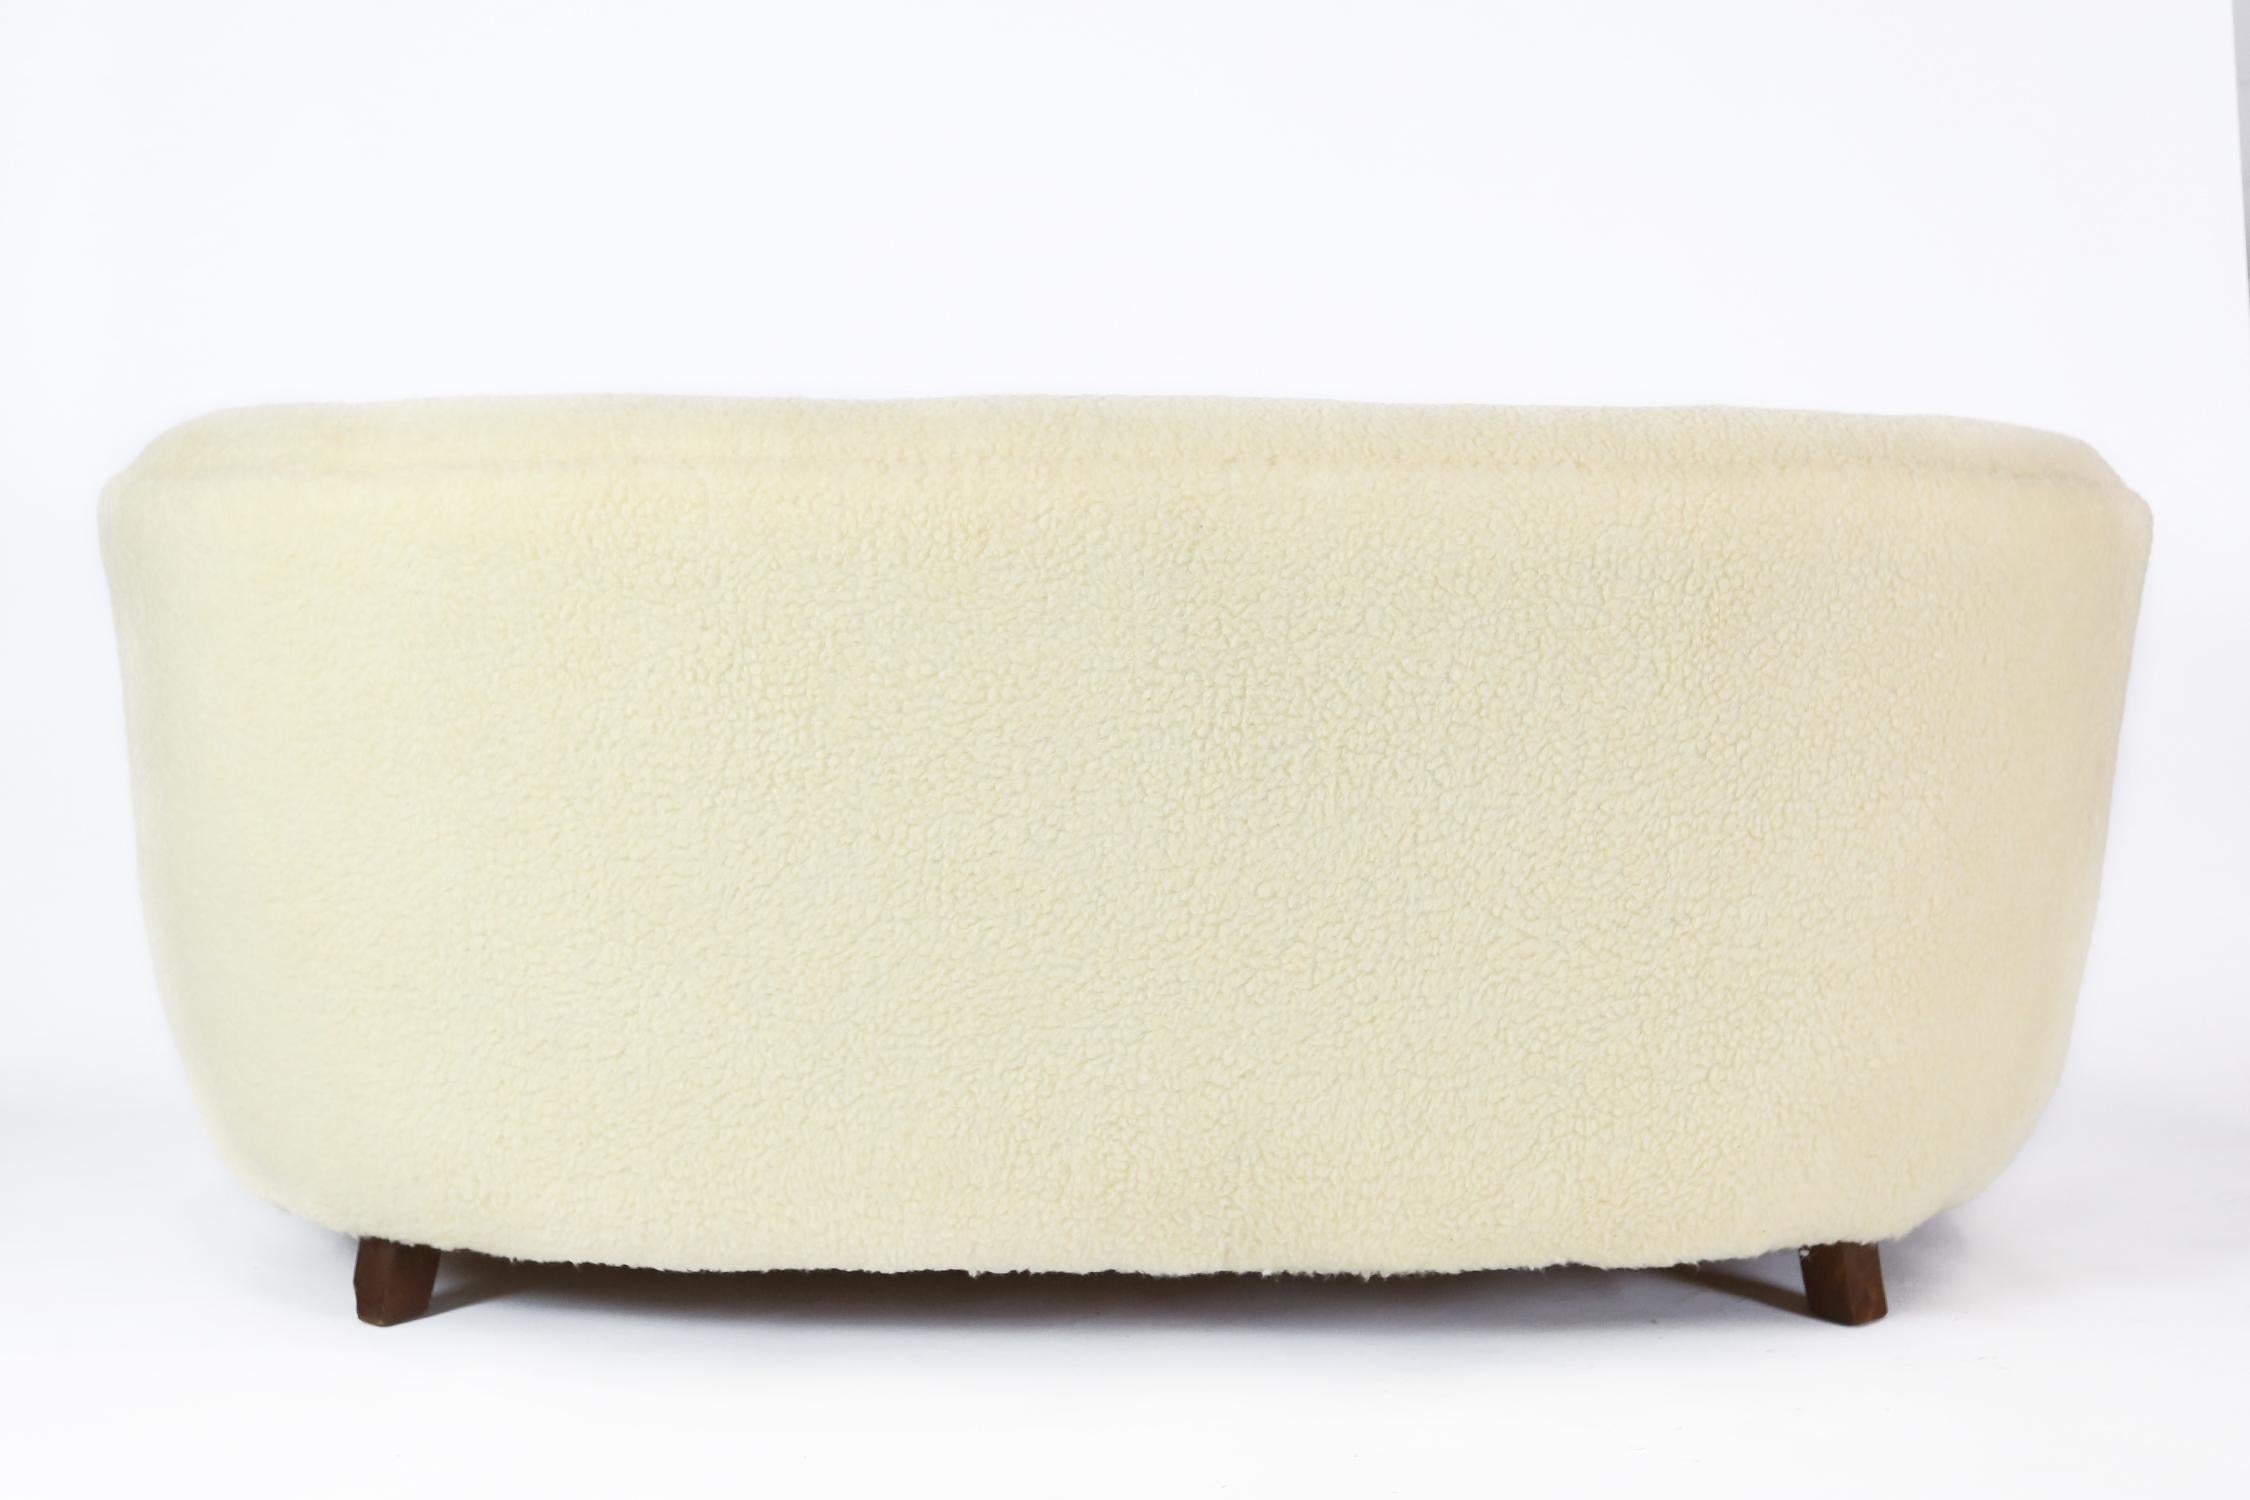 Curved Danish Scheepskin Banana Sofa from 1940s, Viggo Boesen Style For Sale 3